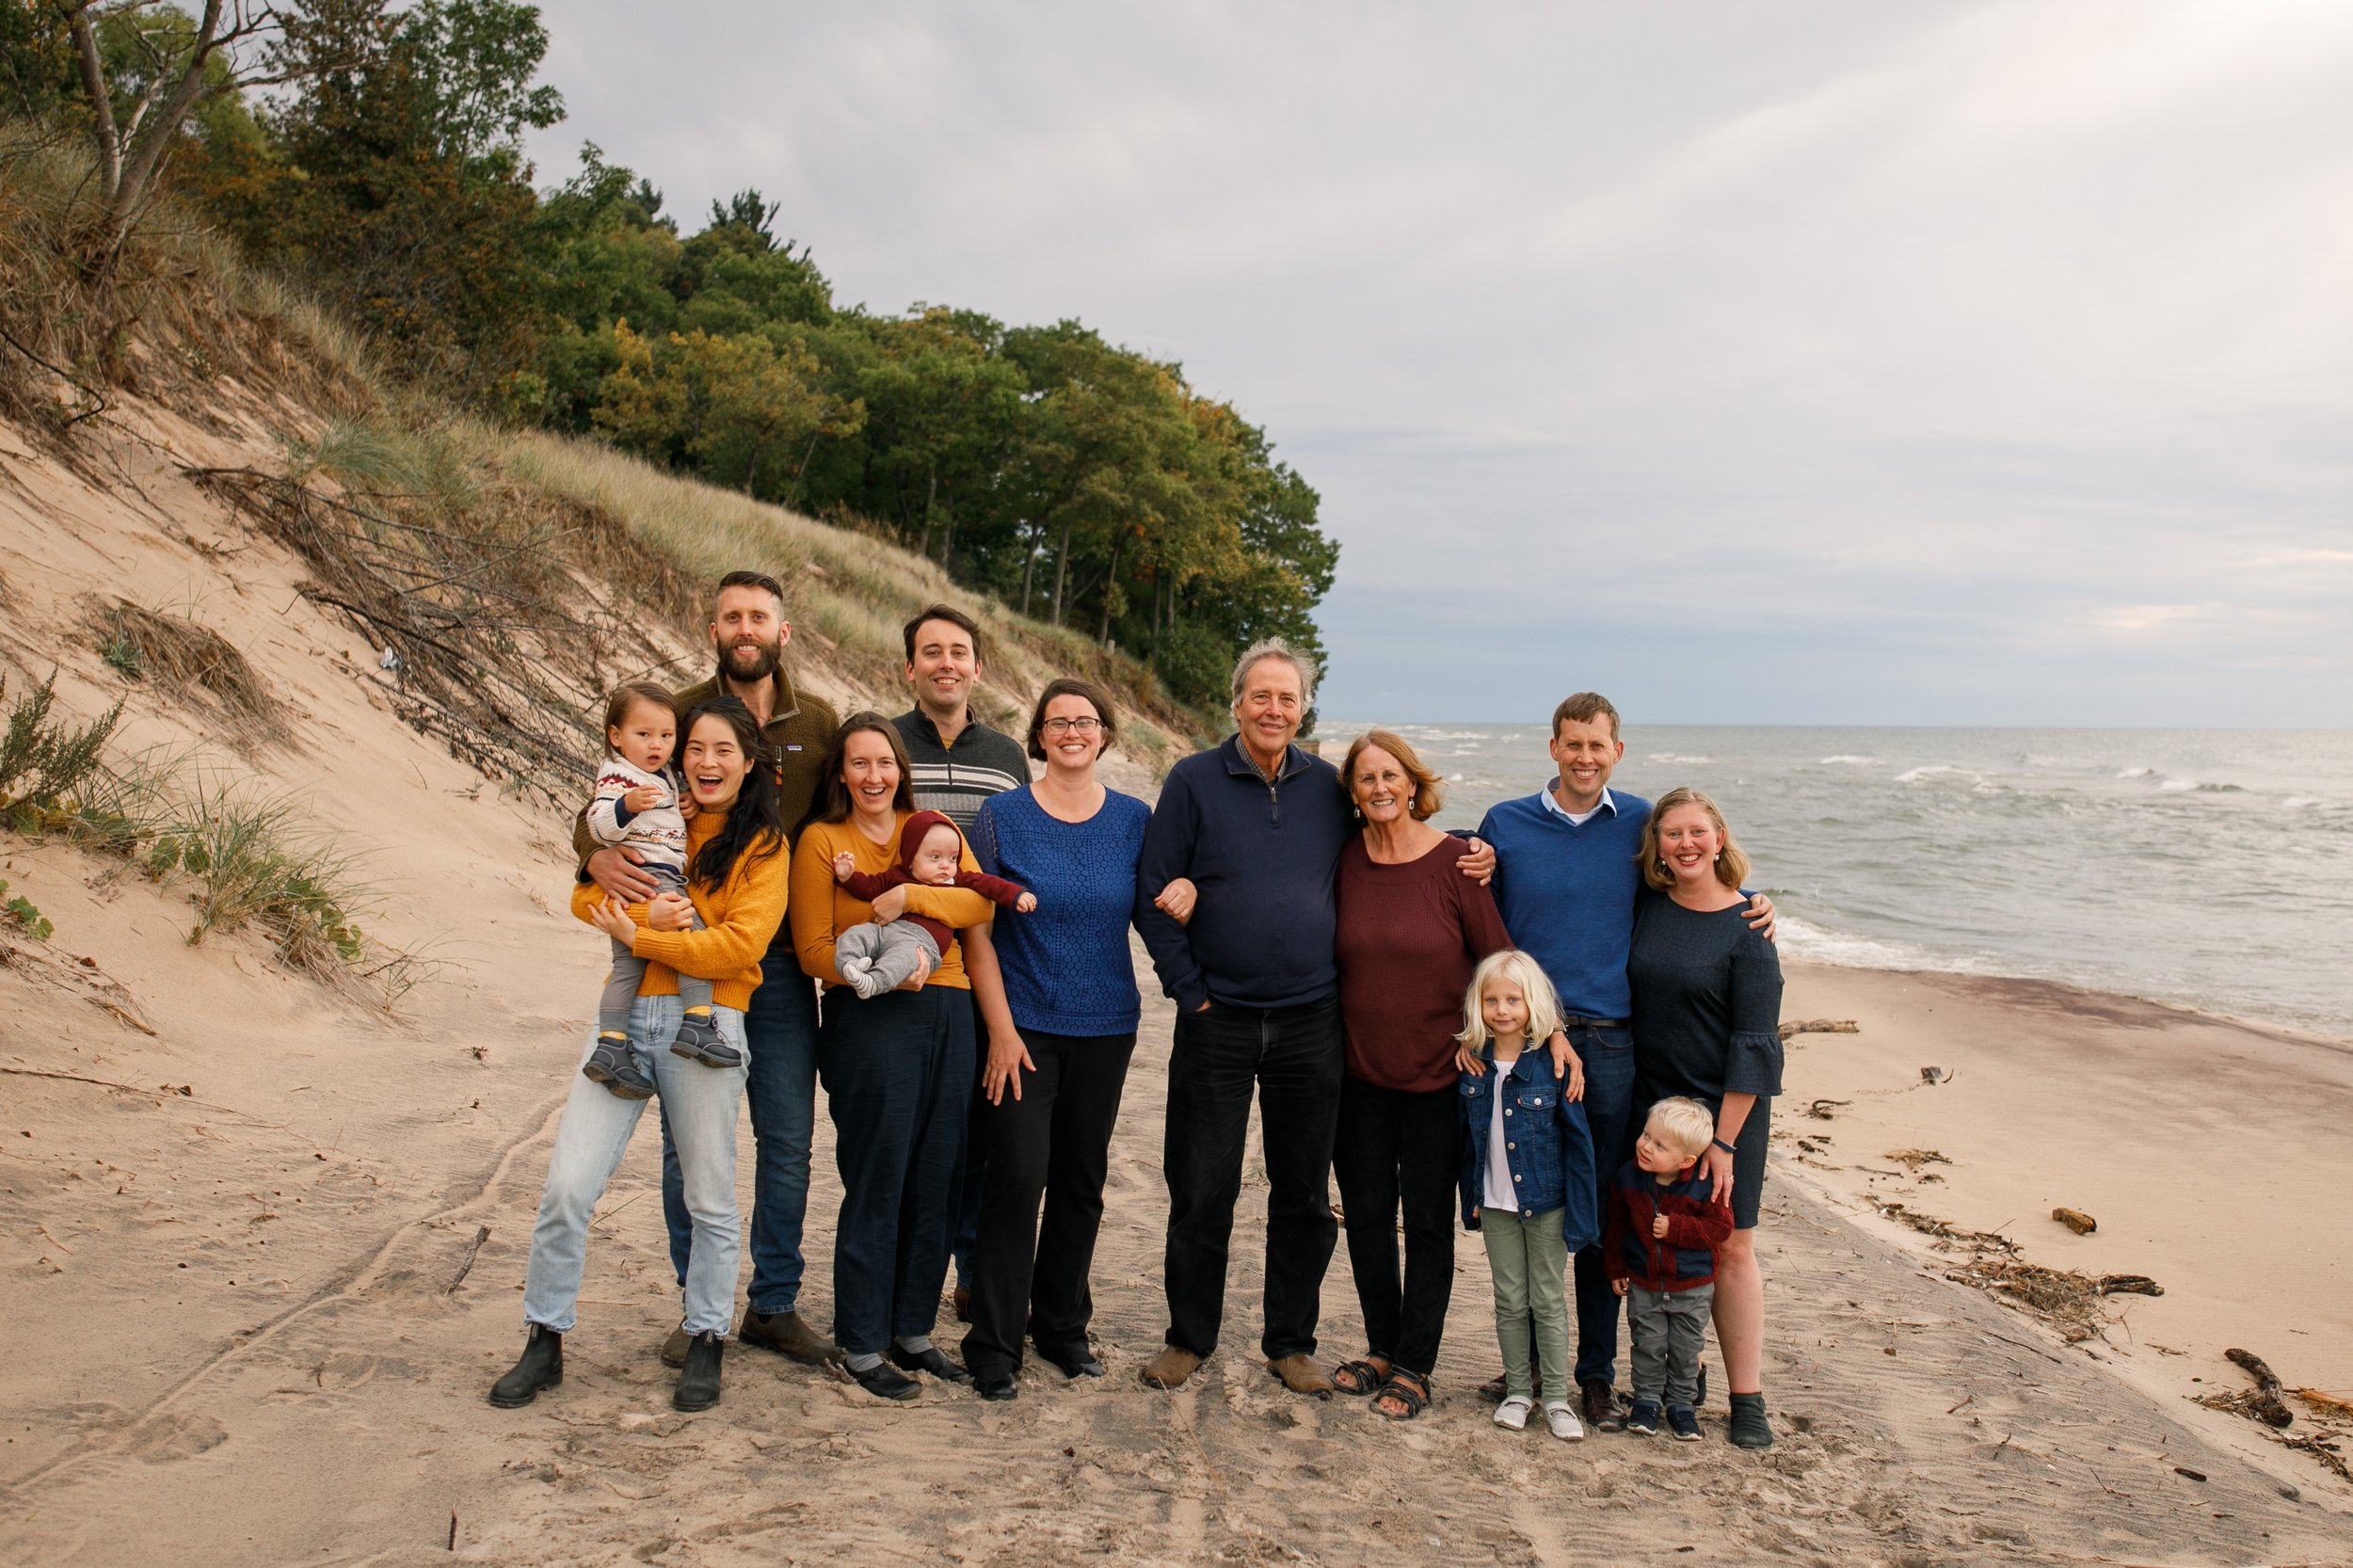 Saugatuck Family Photographer - Oval Beach - Saugatuck Michigan - Saugatuck Photographer - Extended Family Photography - South Bend Family Photographer - J Darling Photo03.jpg